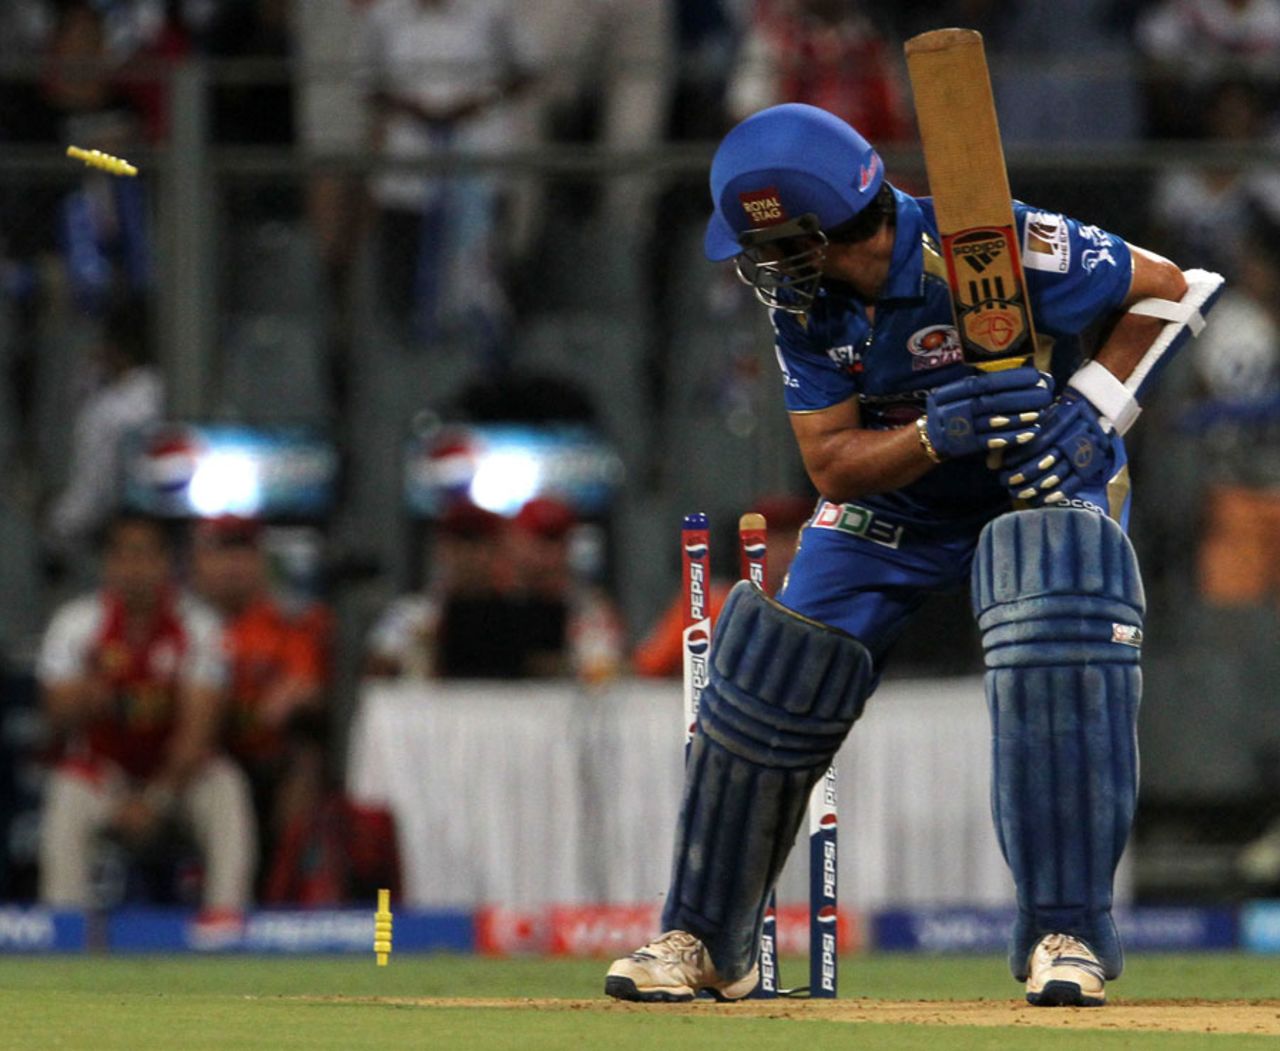 Sachin Tendulkar was bowled by Praveen Kumar, Mumbai Indians v Kings XI Punjab, IPL 2013, Mumbai, April 29, 2013
